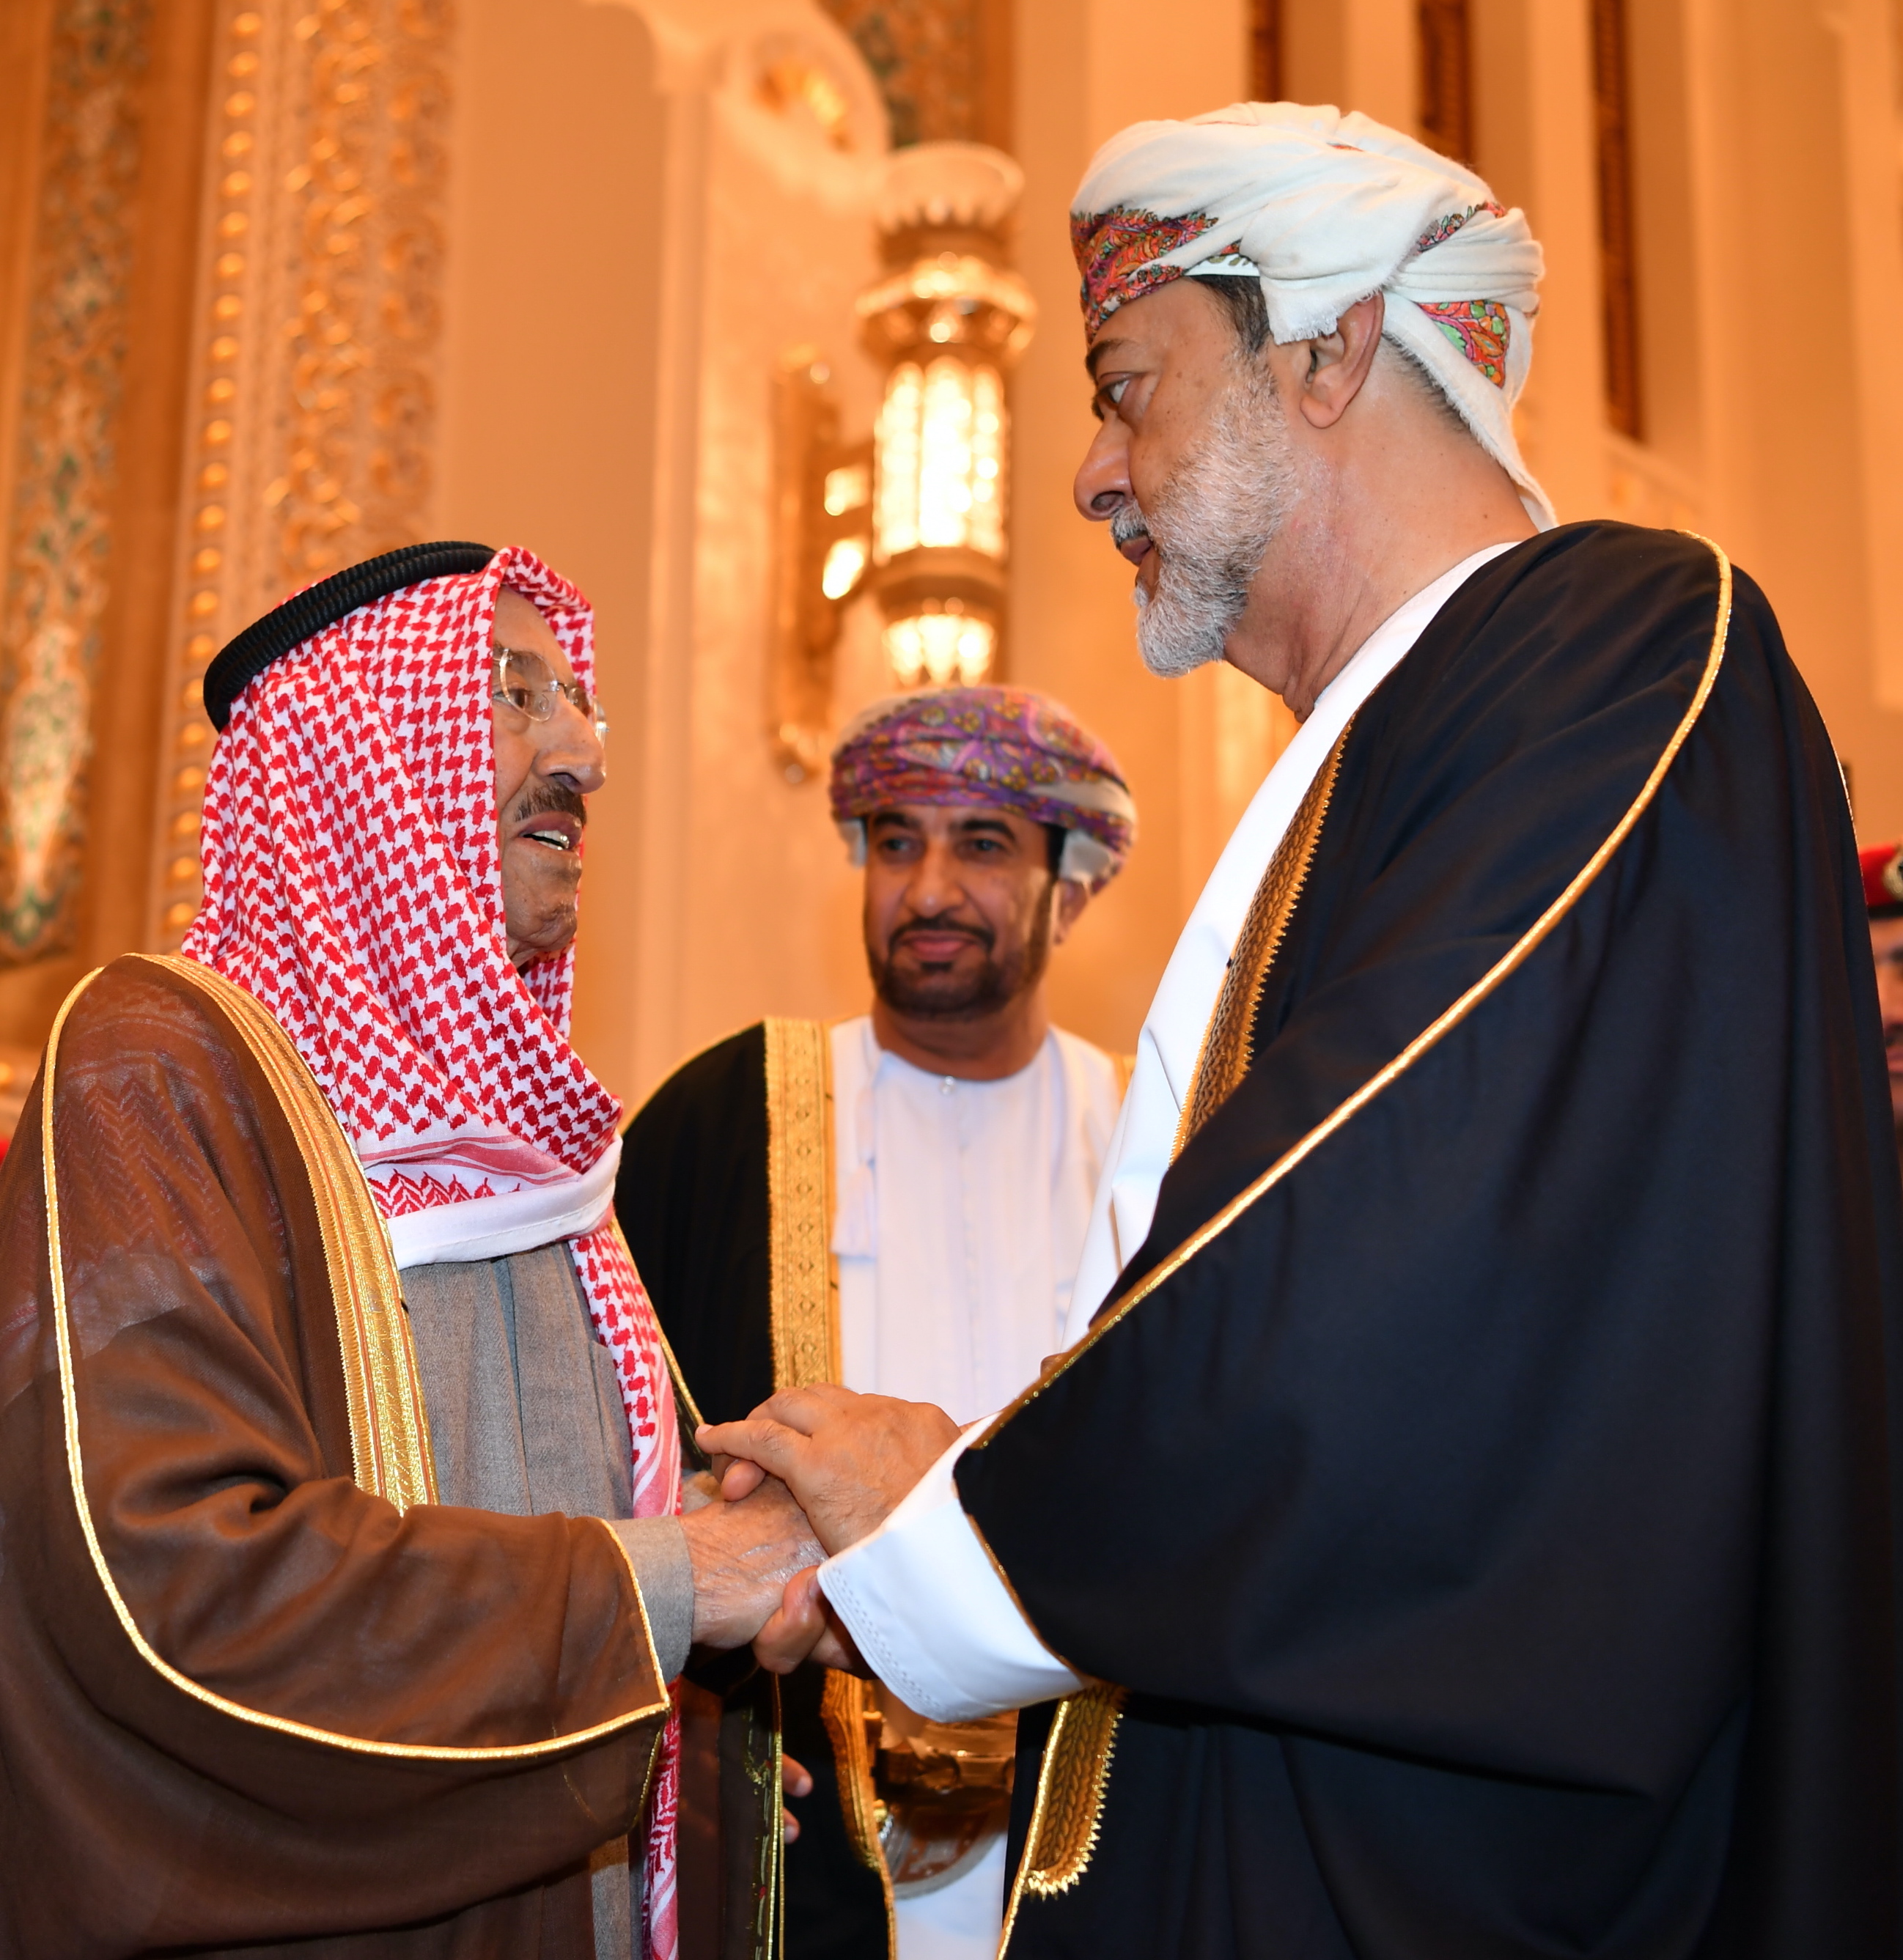 HH the Amir offered his condolences over Sultan Qaboos bin Said's death